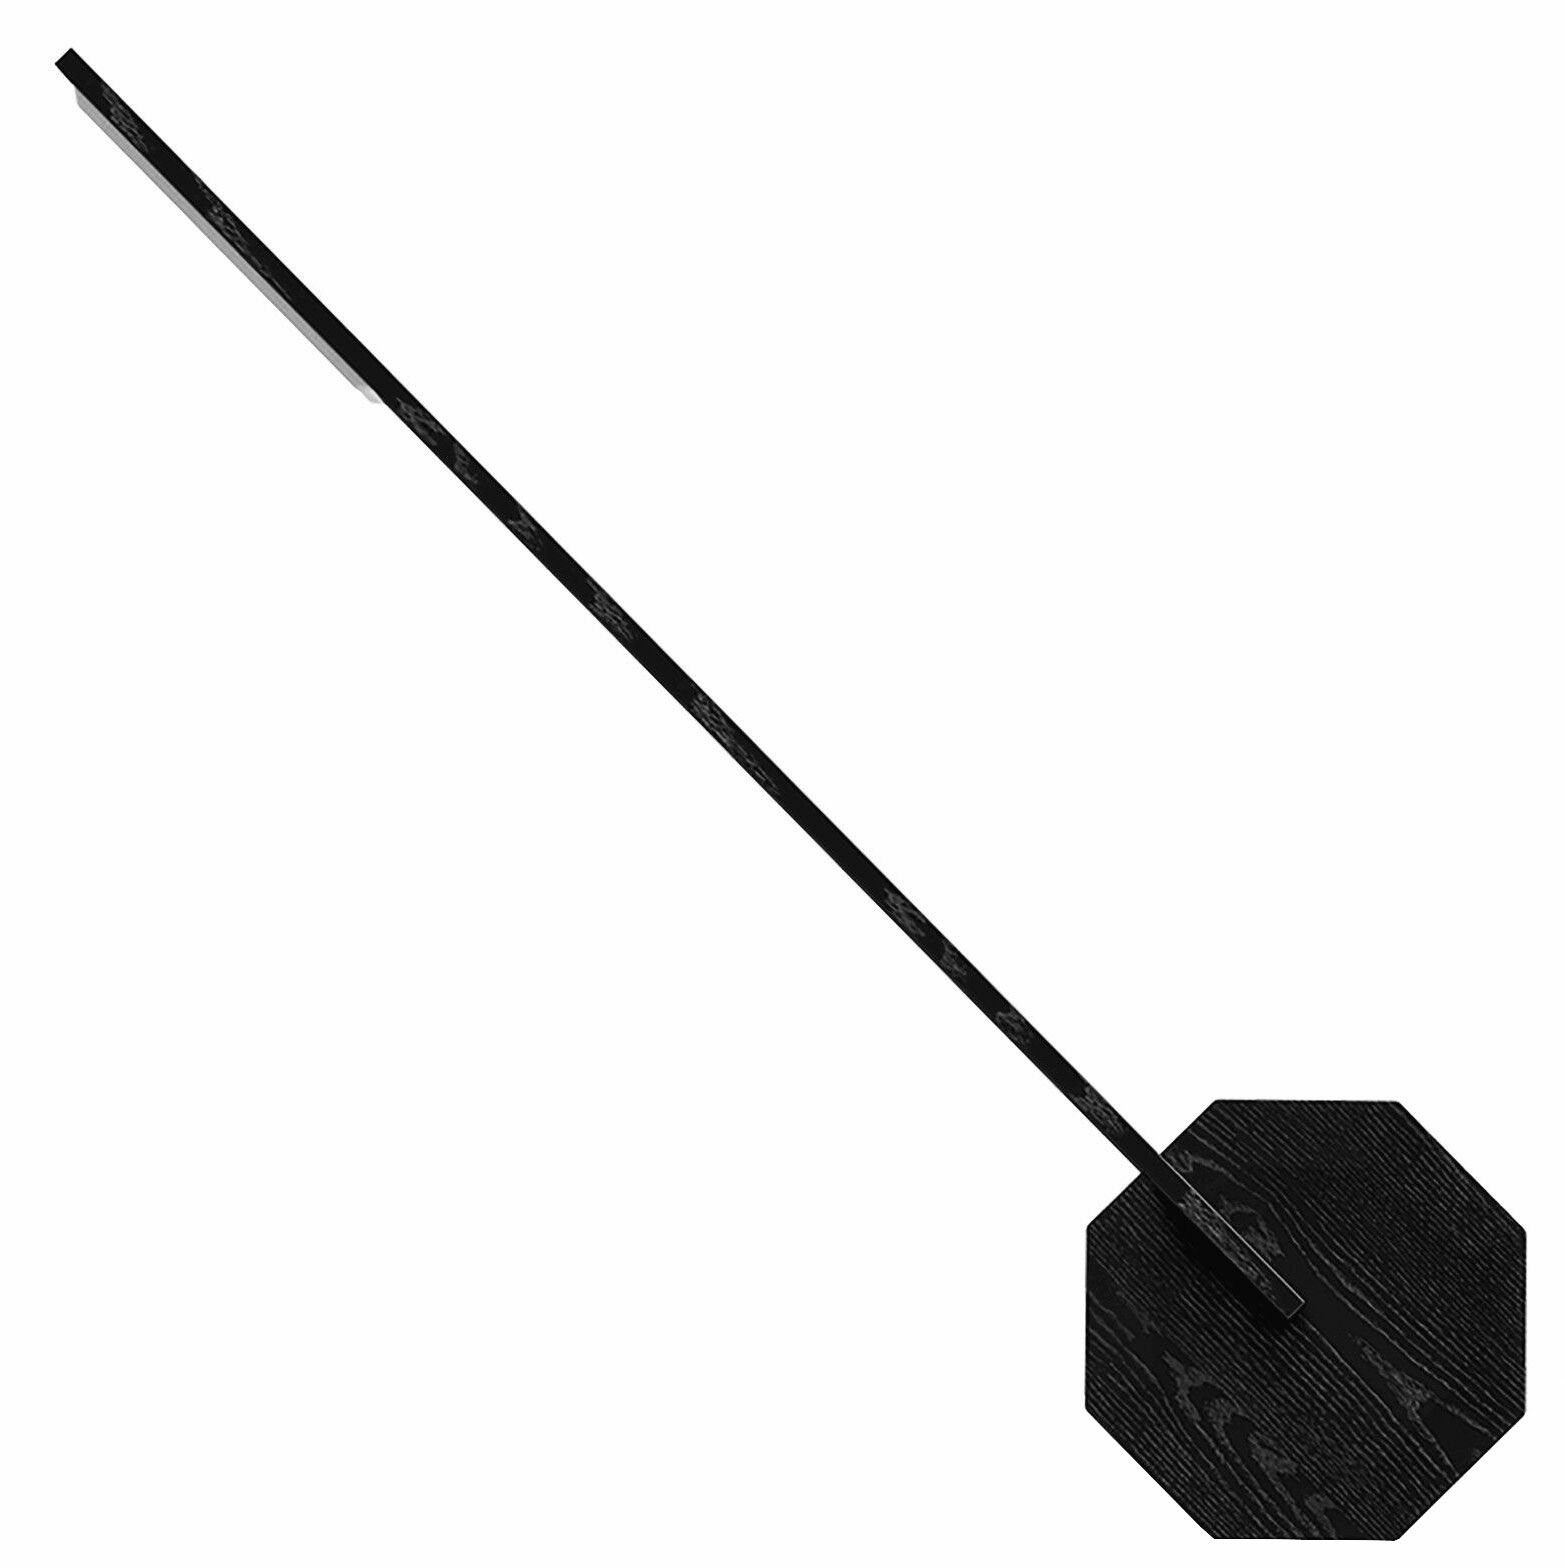 Draadloze LED-bureaulamp "Octagon One", zwarte versie von Gingko